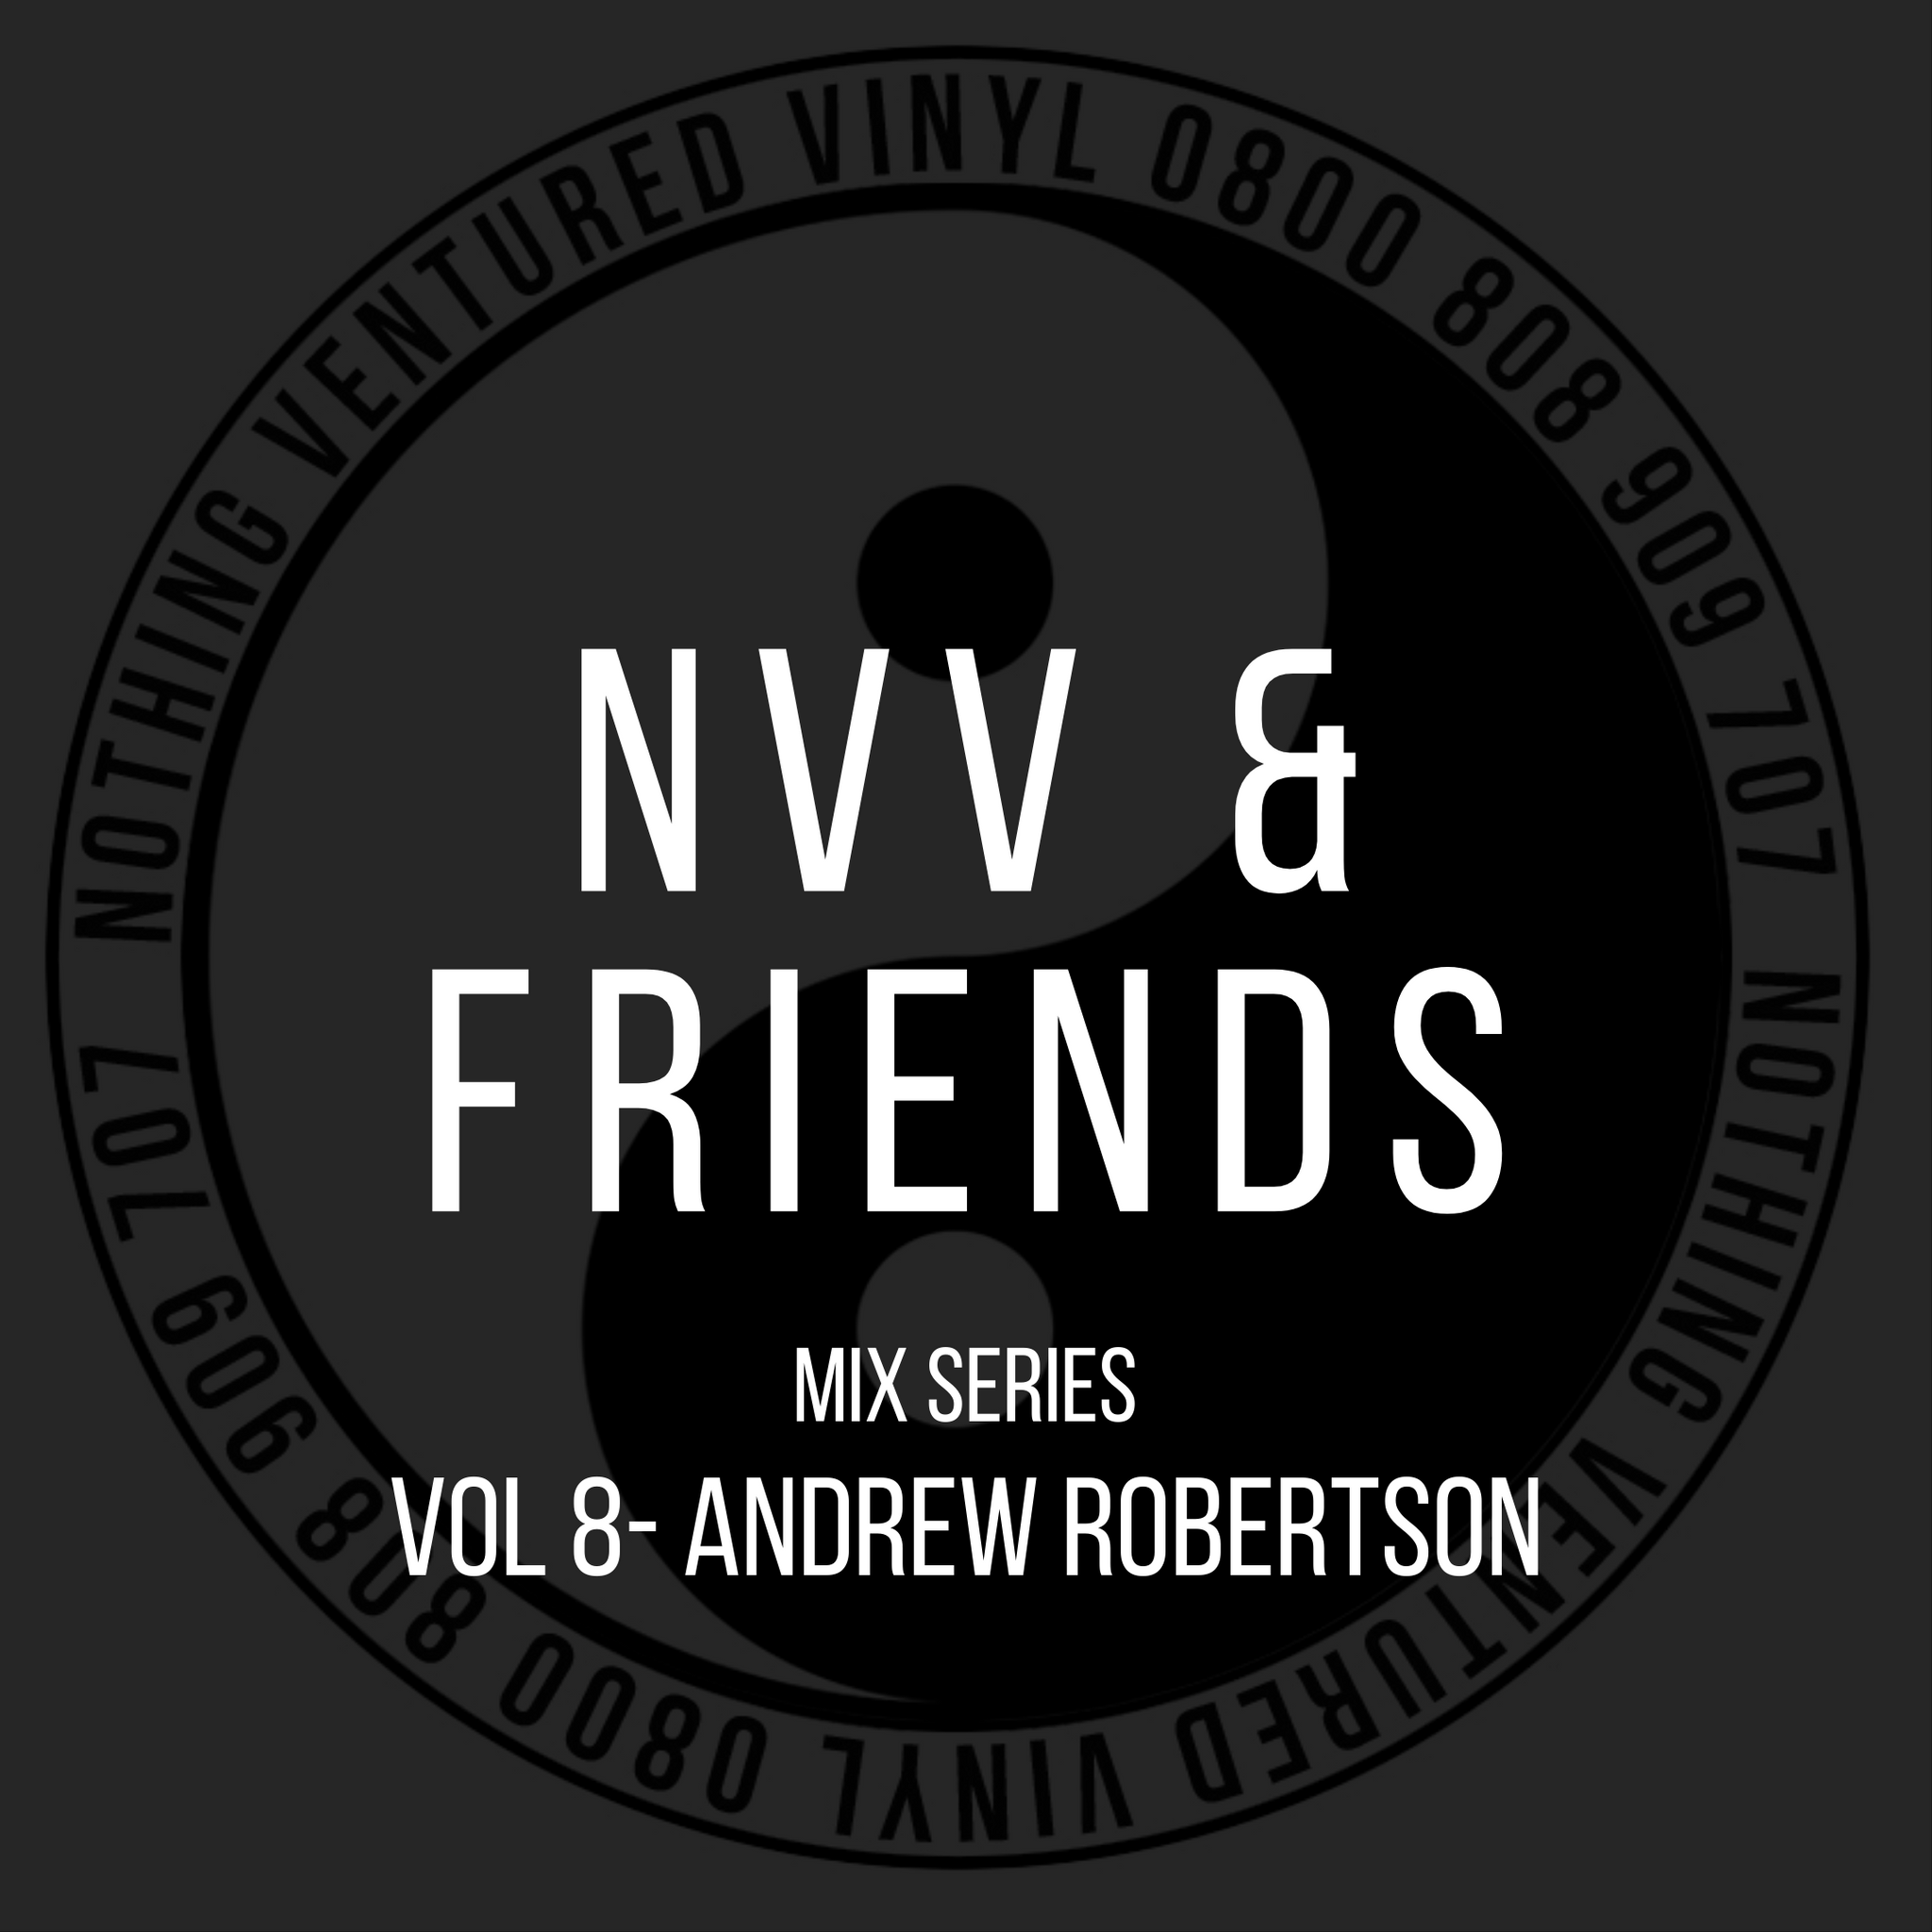 NVV & FRIENDS VOL8 - ANDREW ROBERTSON